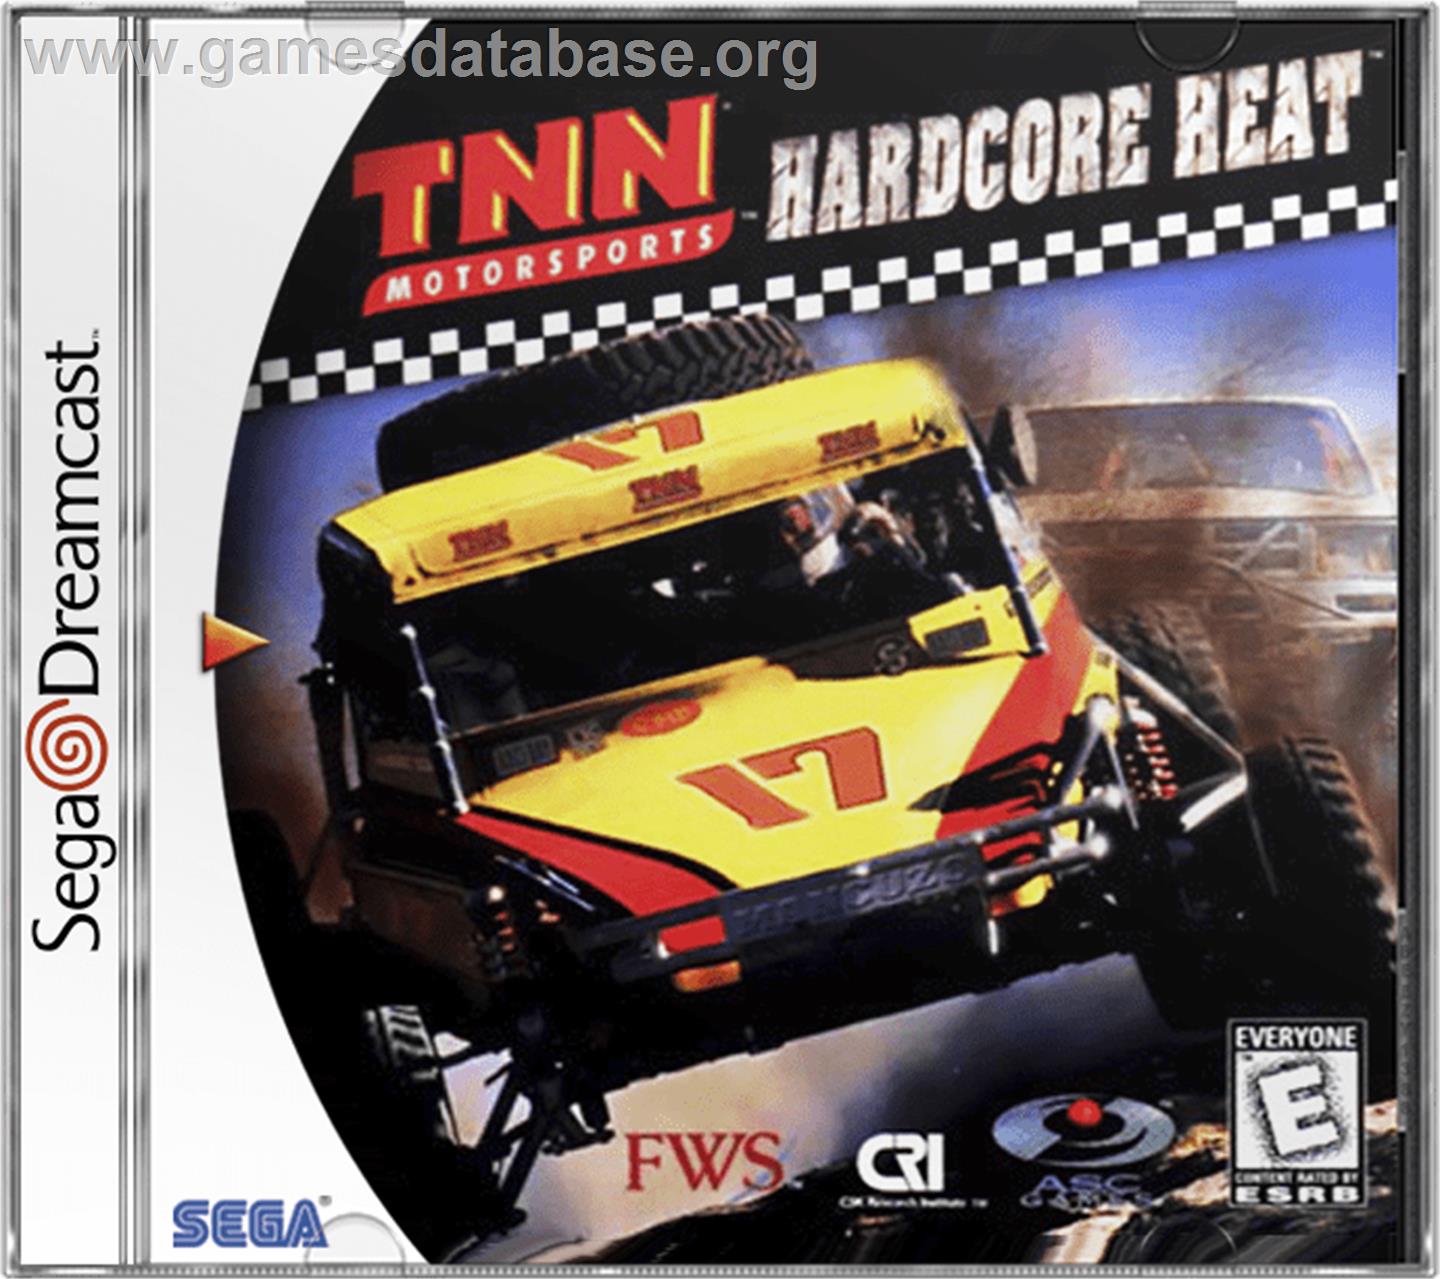 TNN Motorsports Hardcore Heat - Sega Dreamcast - Artwork - Box